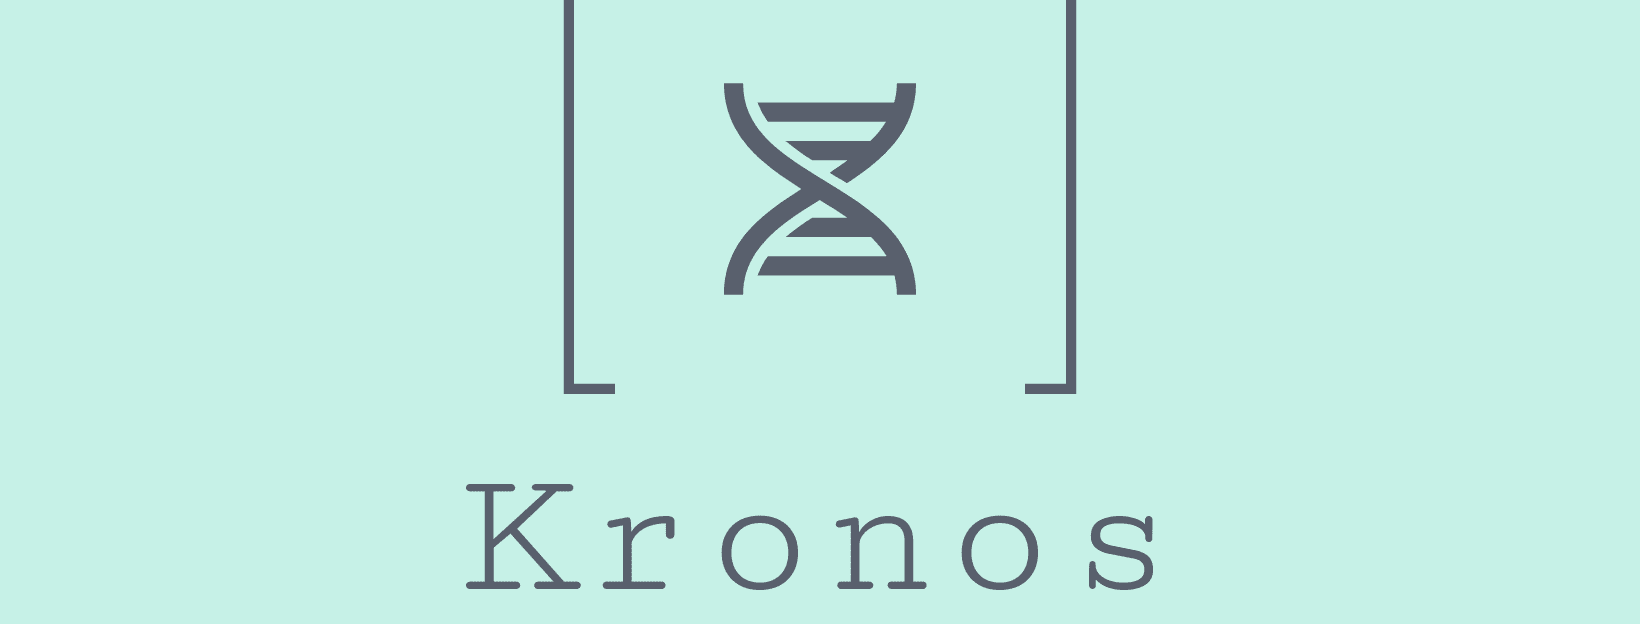 Kronos top banner